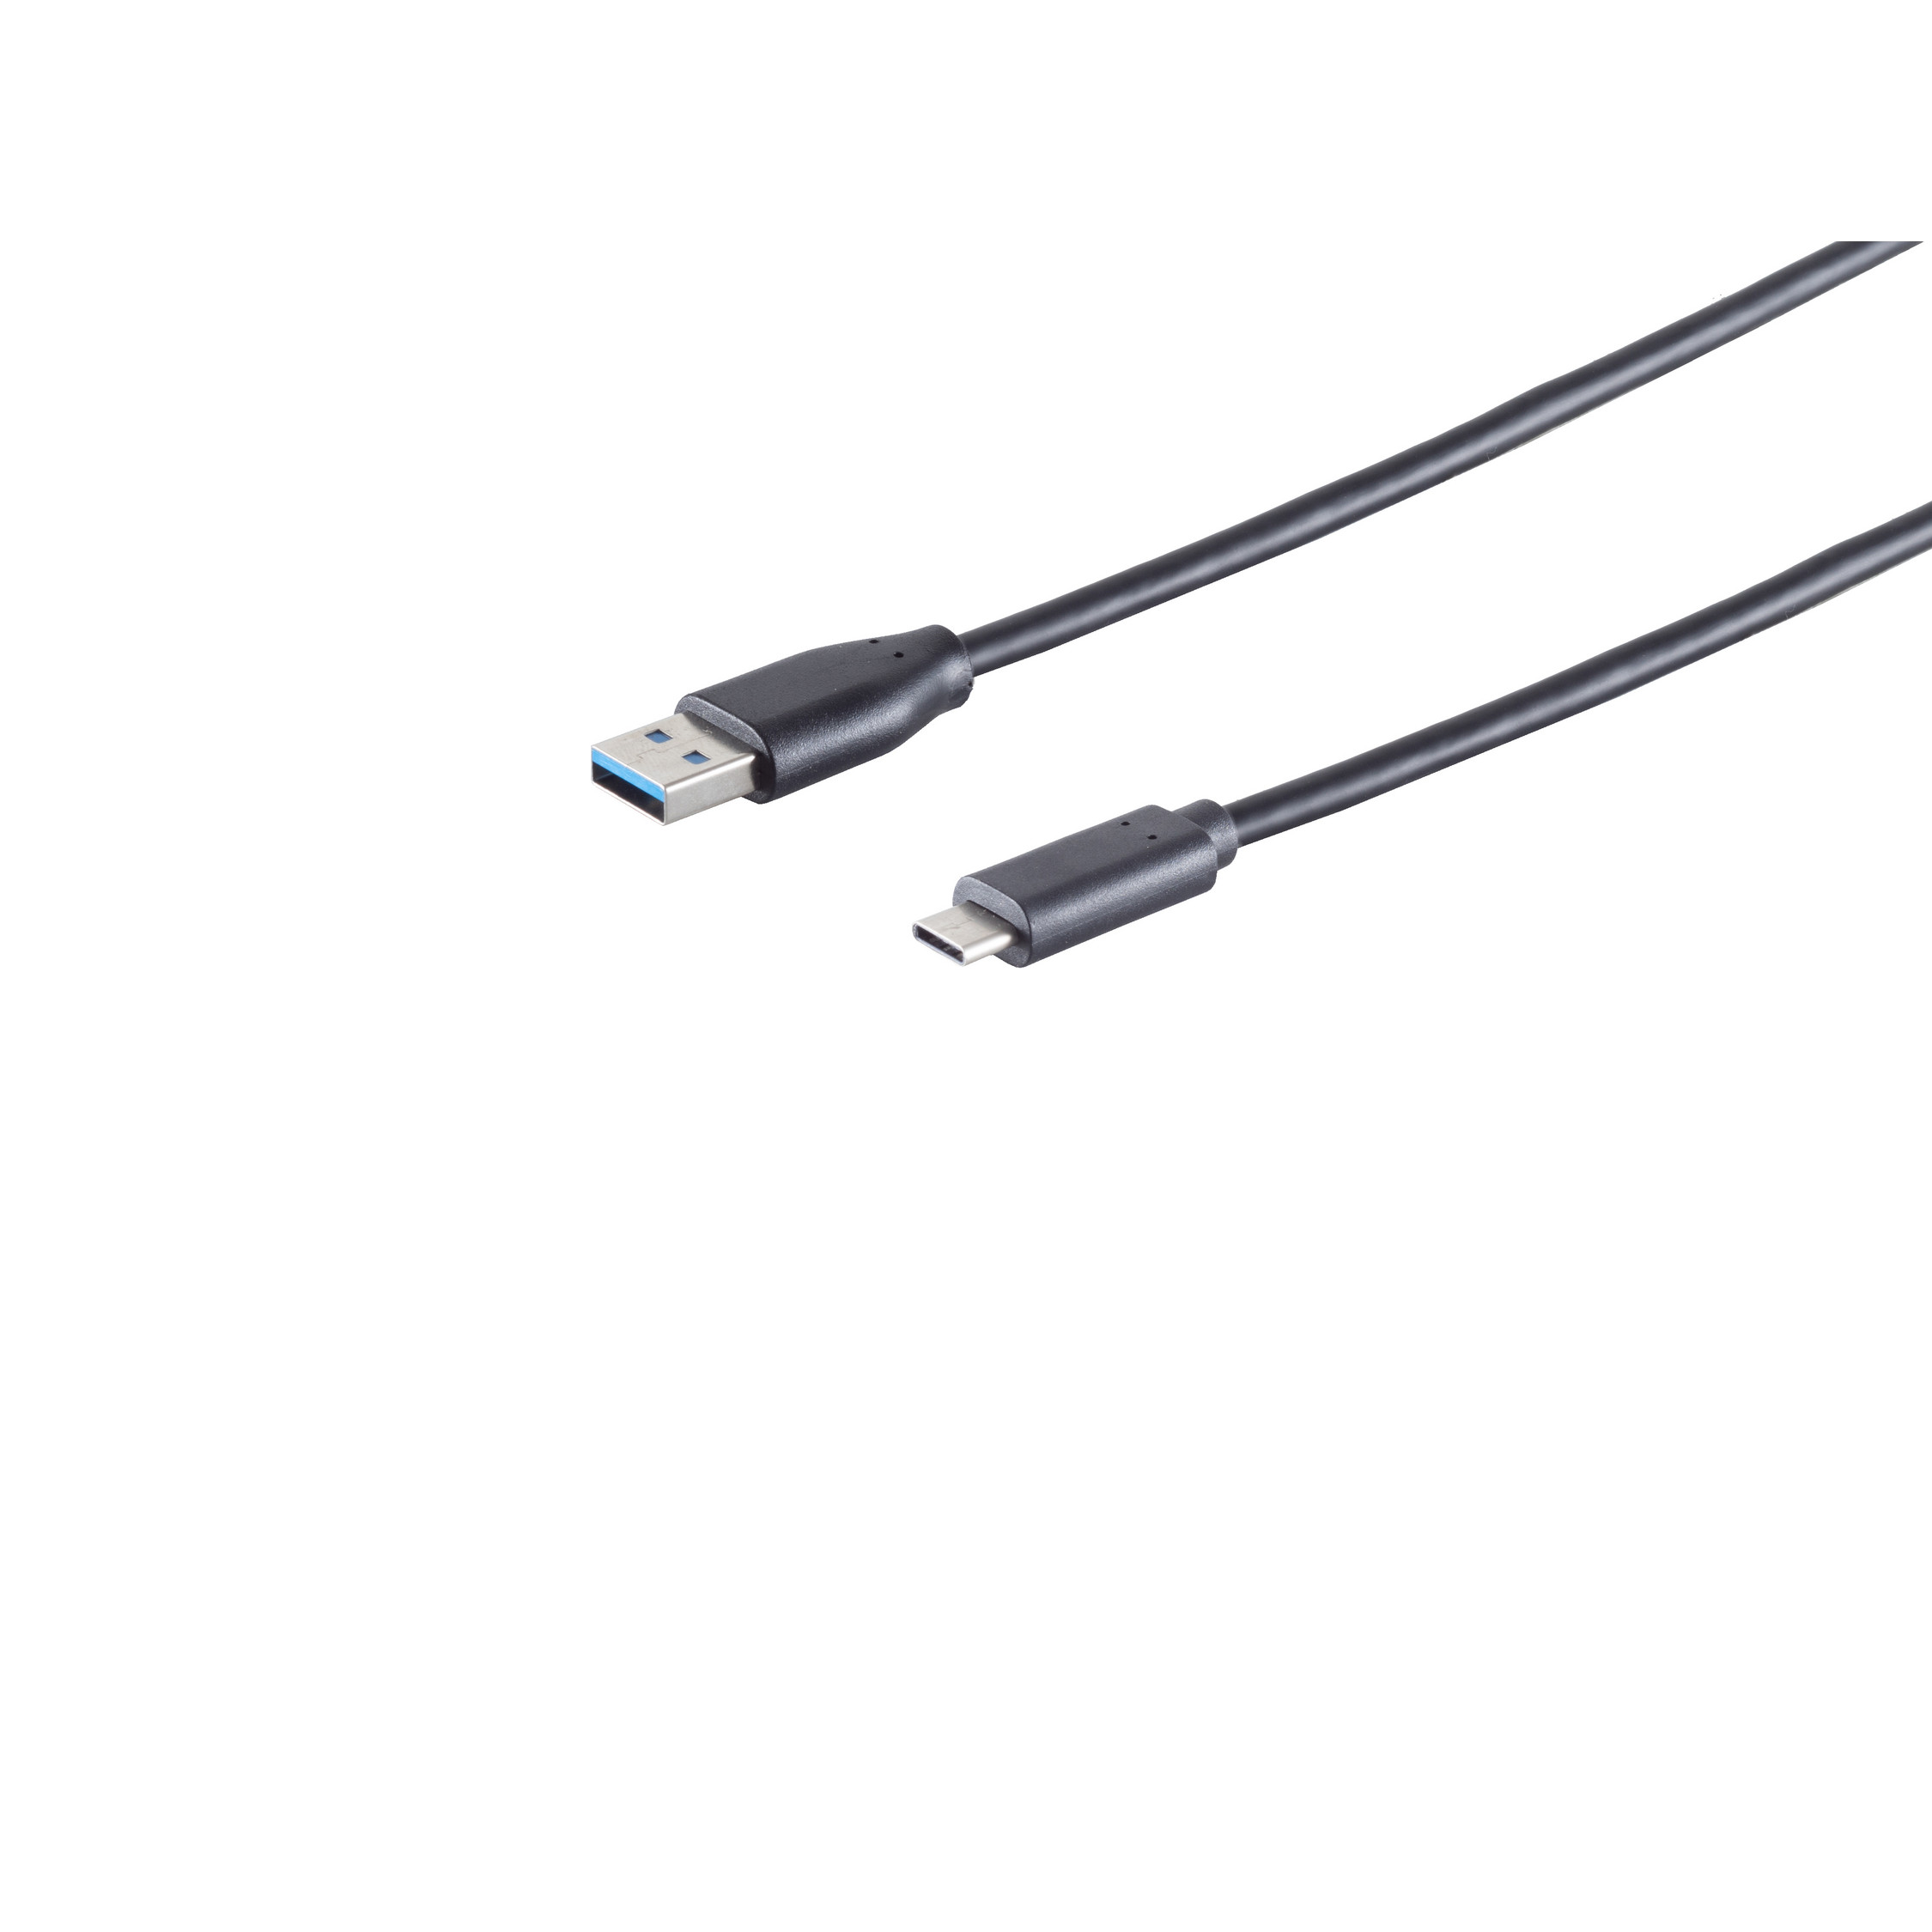 Kabel C-Stecker USB 3.1 3.0 CONNECTIVITY A-Stecker, - 1m S/CONN USB MAXIMUM Kabel,